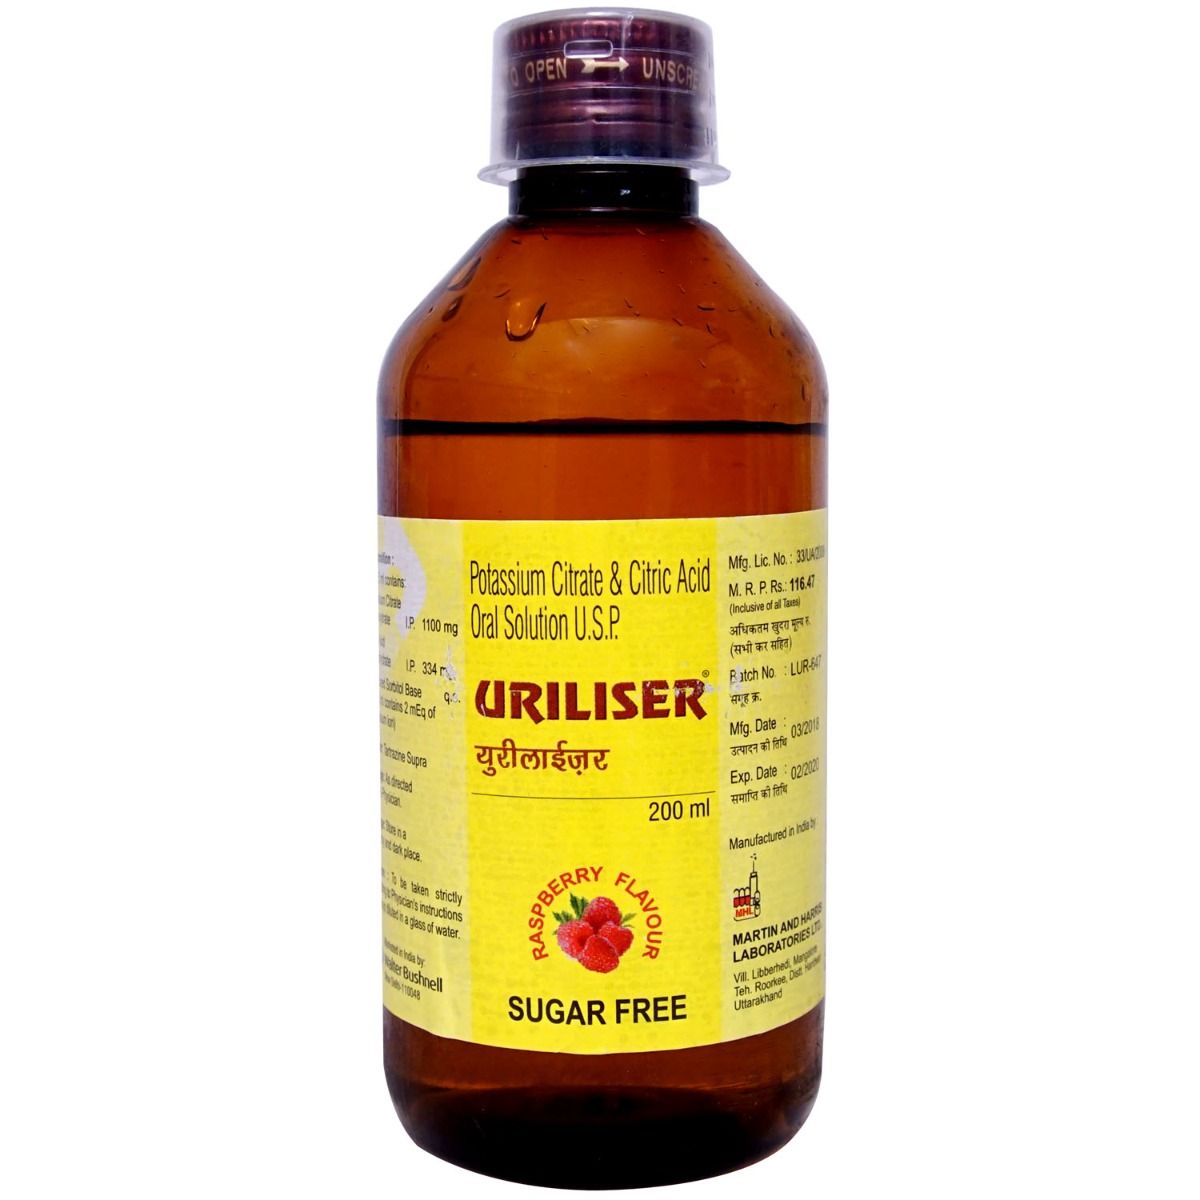 Buy Uriliser Sugar Free Raspberry Oral Solution 200 ml Online